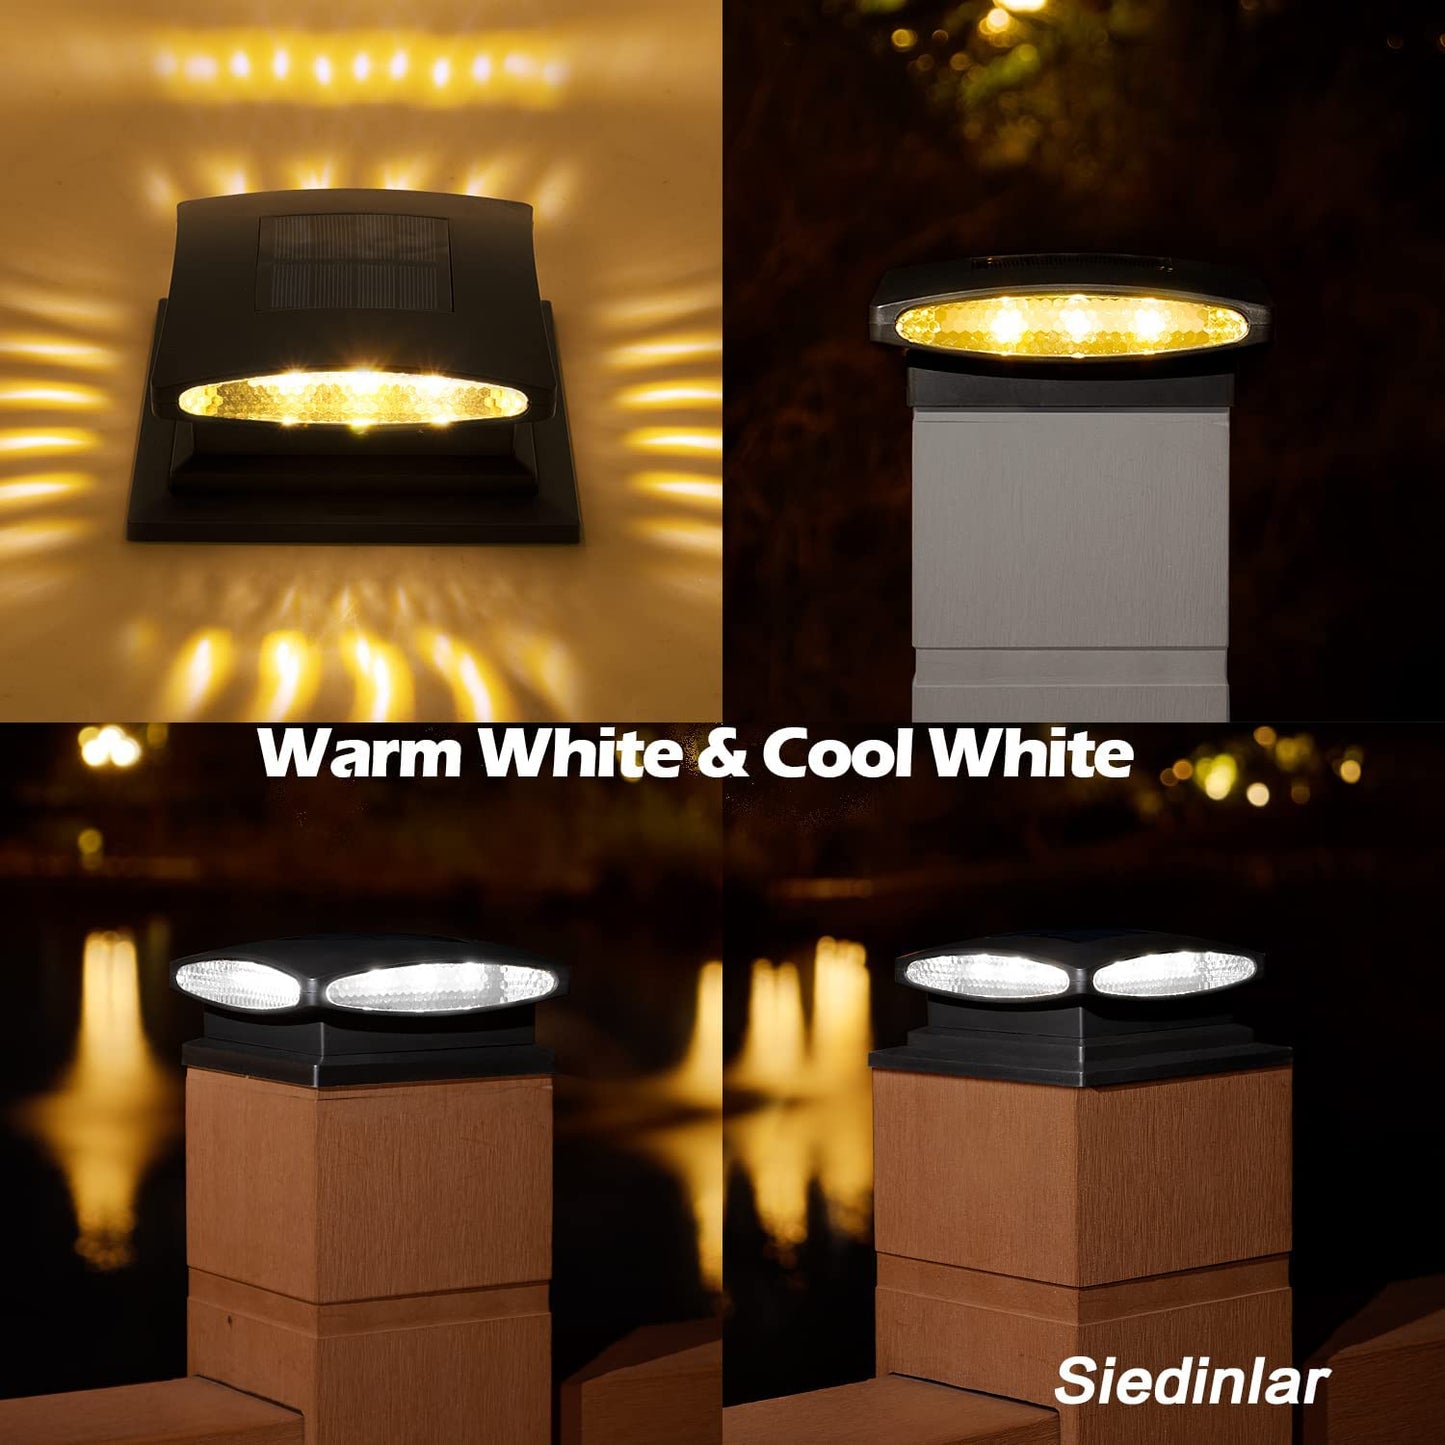 Siedinlar SD1064B Solar Post Cap Lights Outdoor, 2 Modes 24 LED Solar Powered Fence Deck Light for 4x4 5x5 6x6 Posts Garden Patio Decoration Warm White & Cool White, Black (4 Pack)